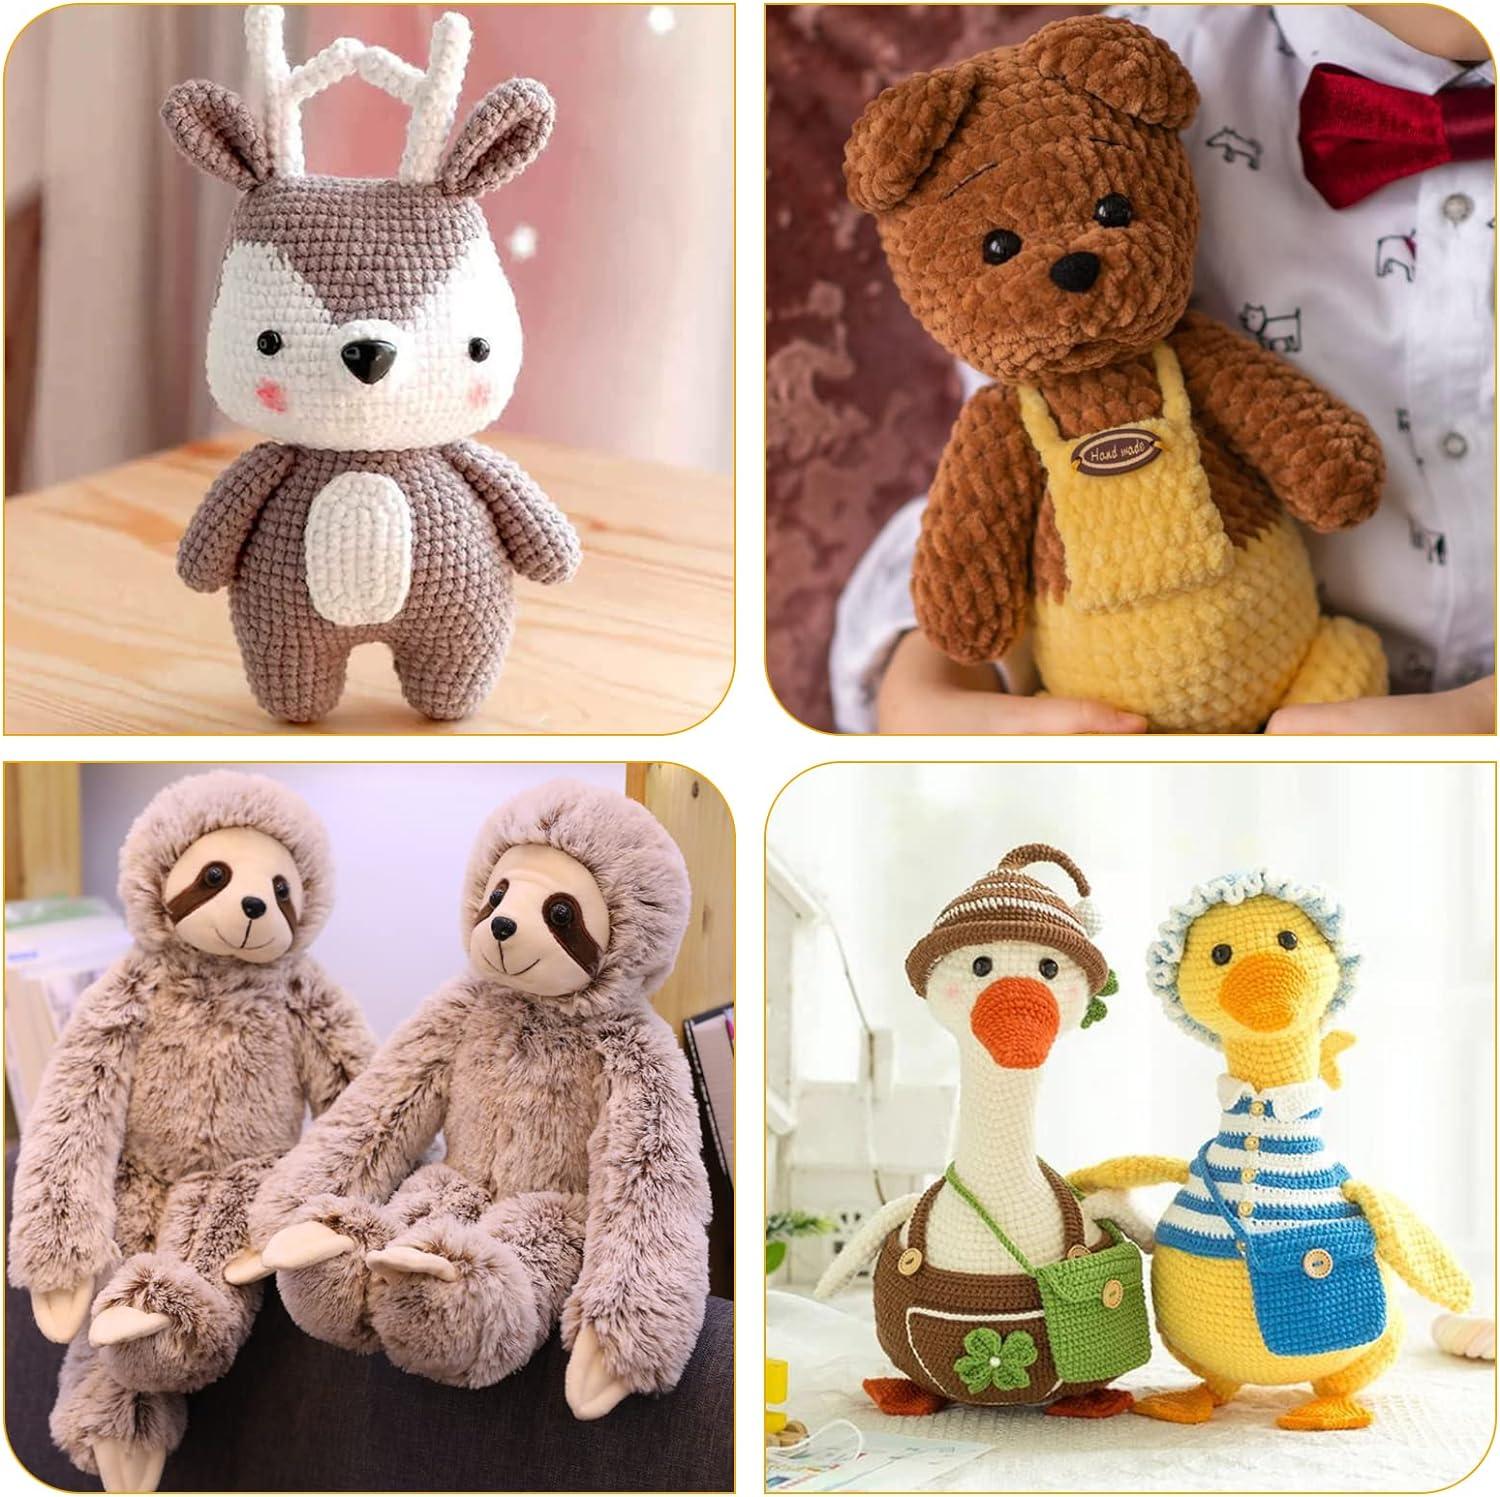 Buylorco 16~30 mm Large Black Safety Eyes for Amigurumi Crochet Crafts Dolls Making Stuffed Animals and Teddy Bear